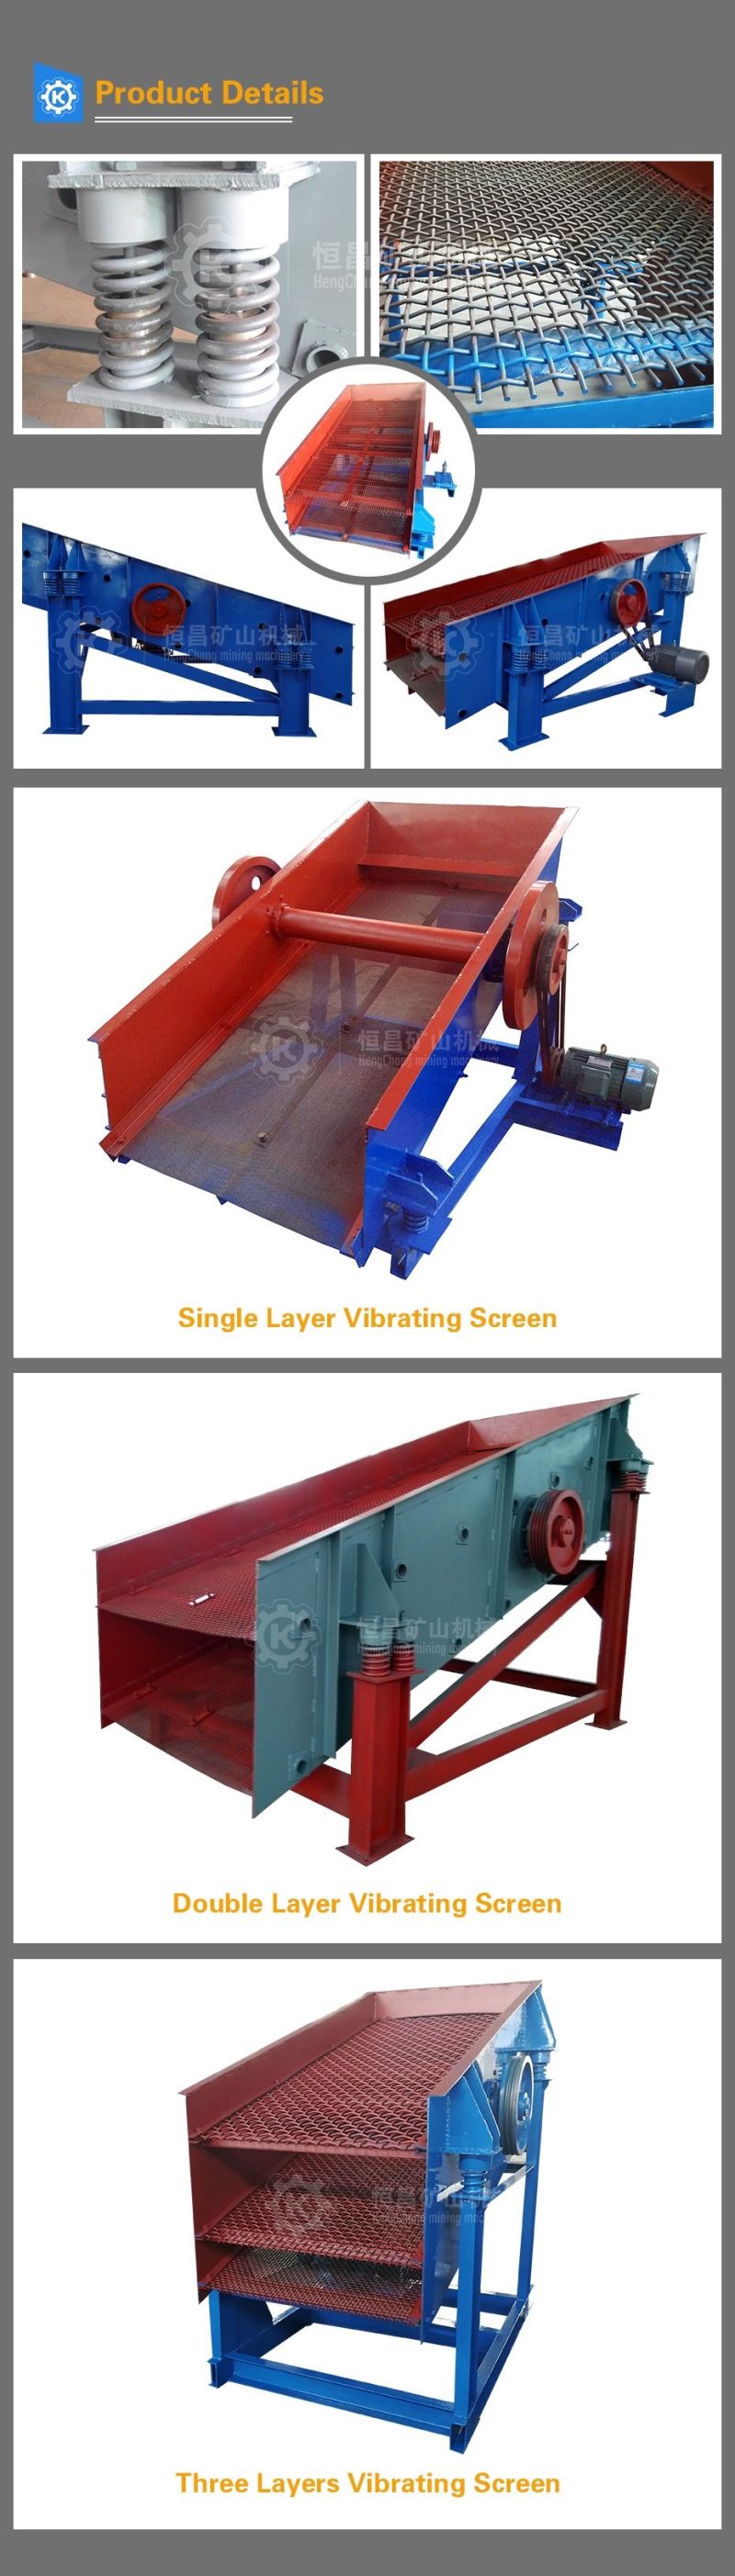 Polyurethane Materials for The Screens High Quality Vibrating Screens